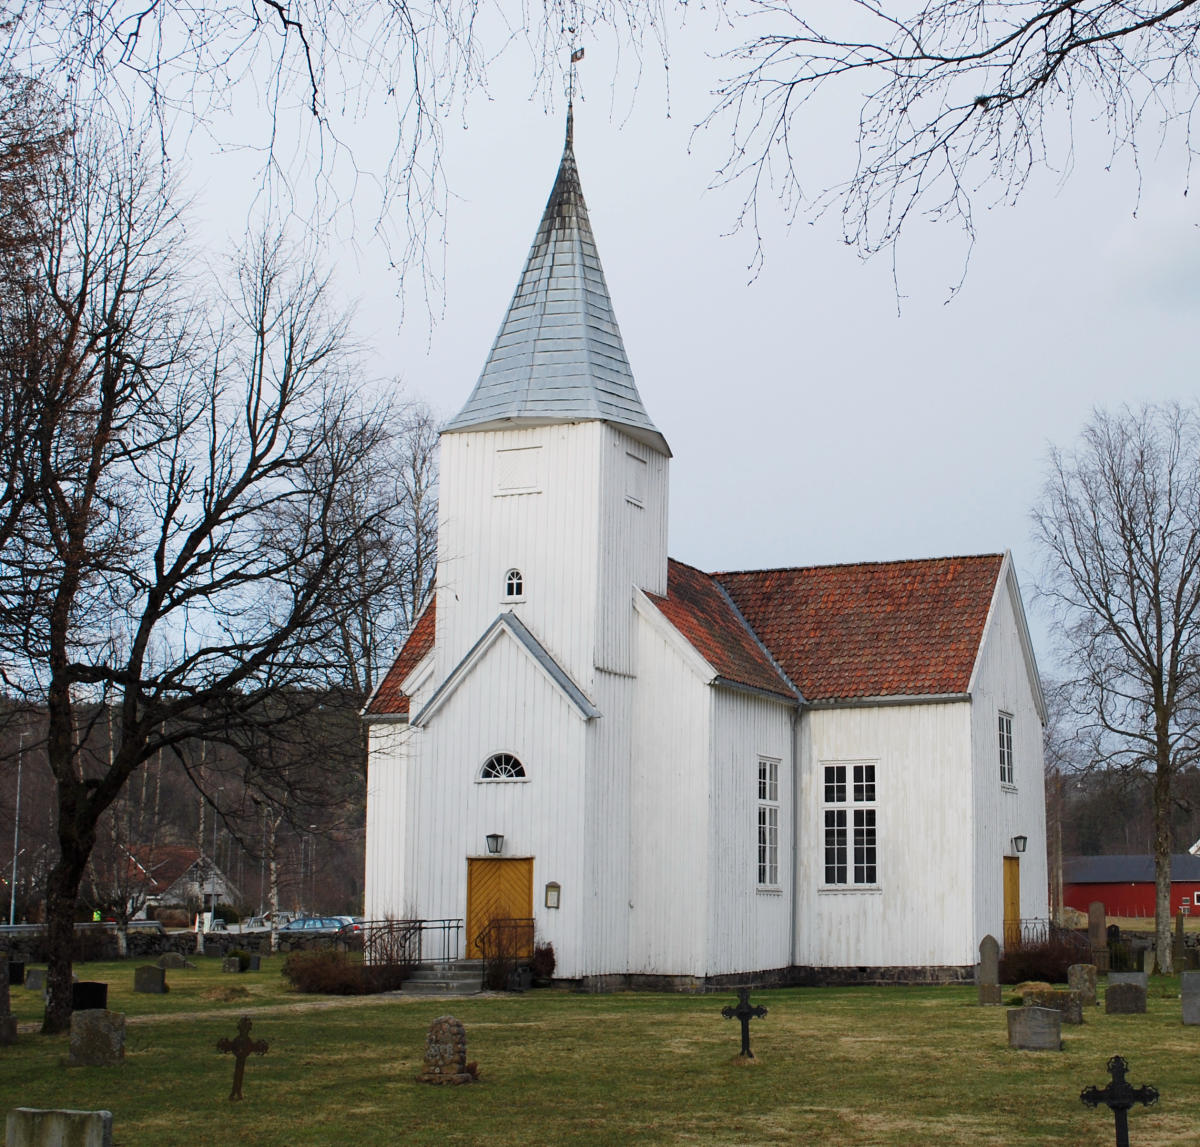 Øyslebø church